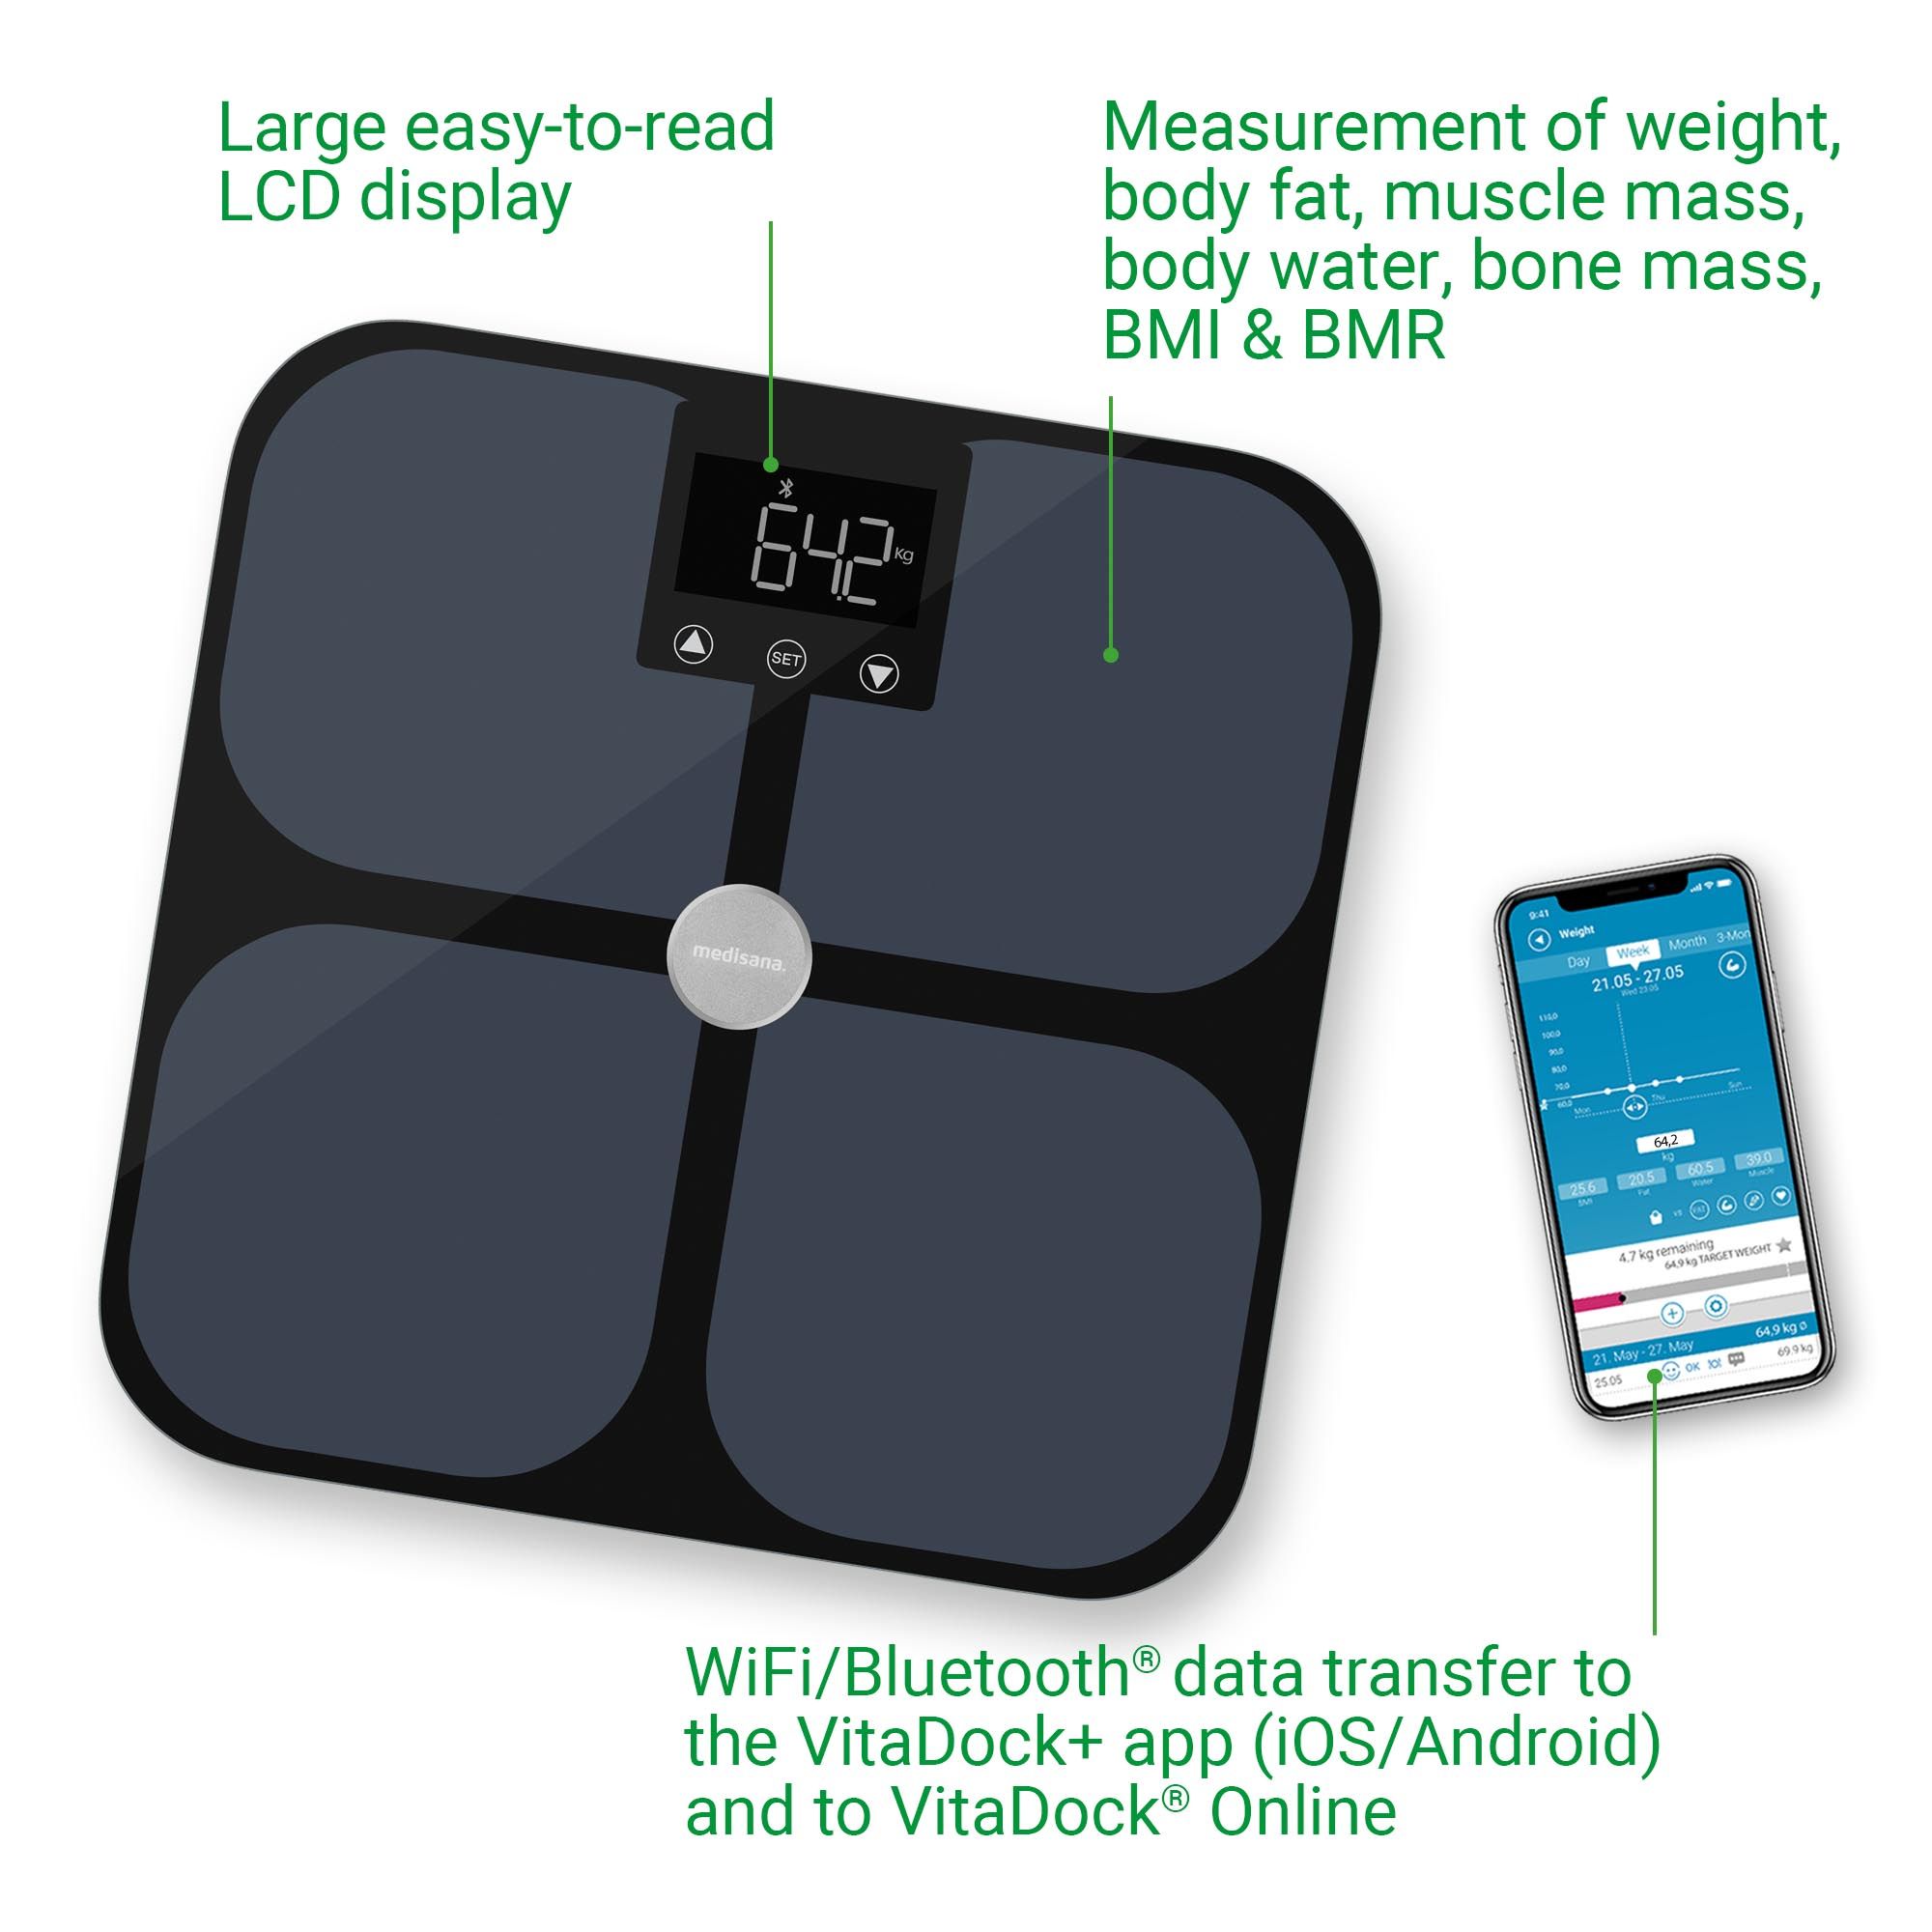 medisana BS 650 Körperanalysewaage mit W-LAN oder Bluetooth - Personenwaage mit Körperanalyse App